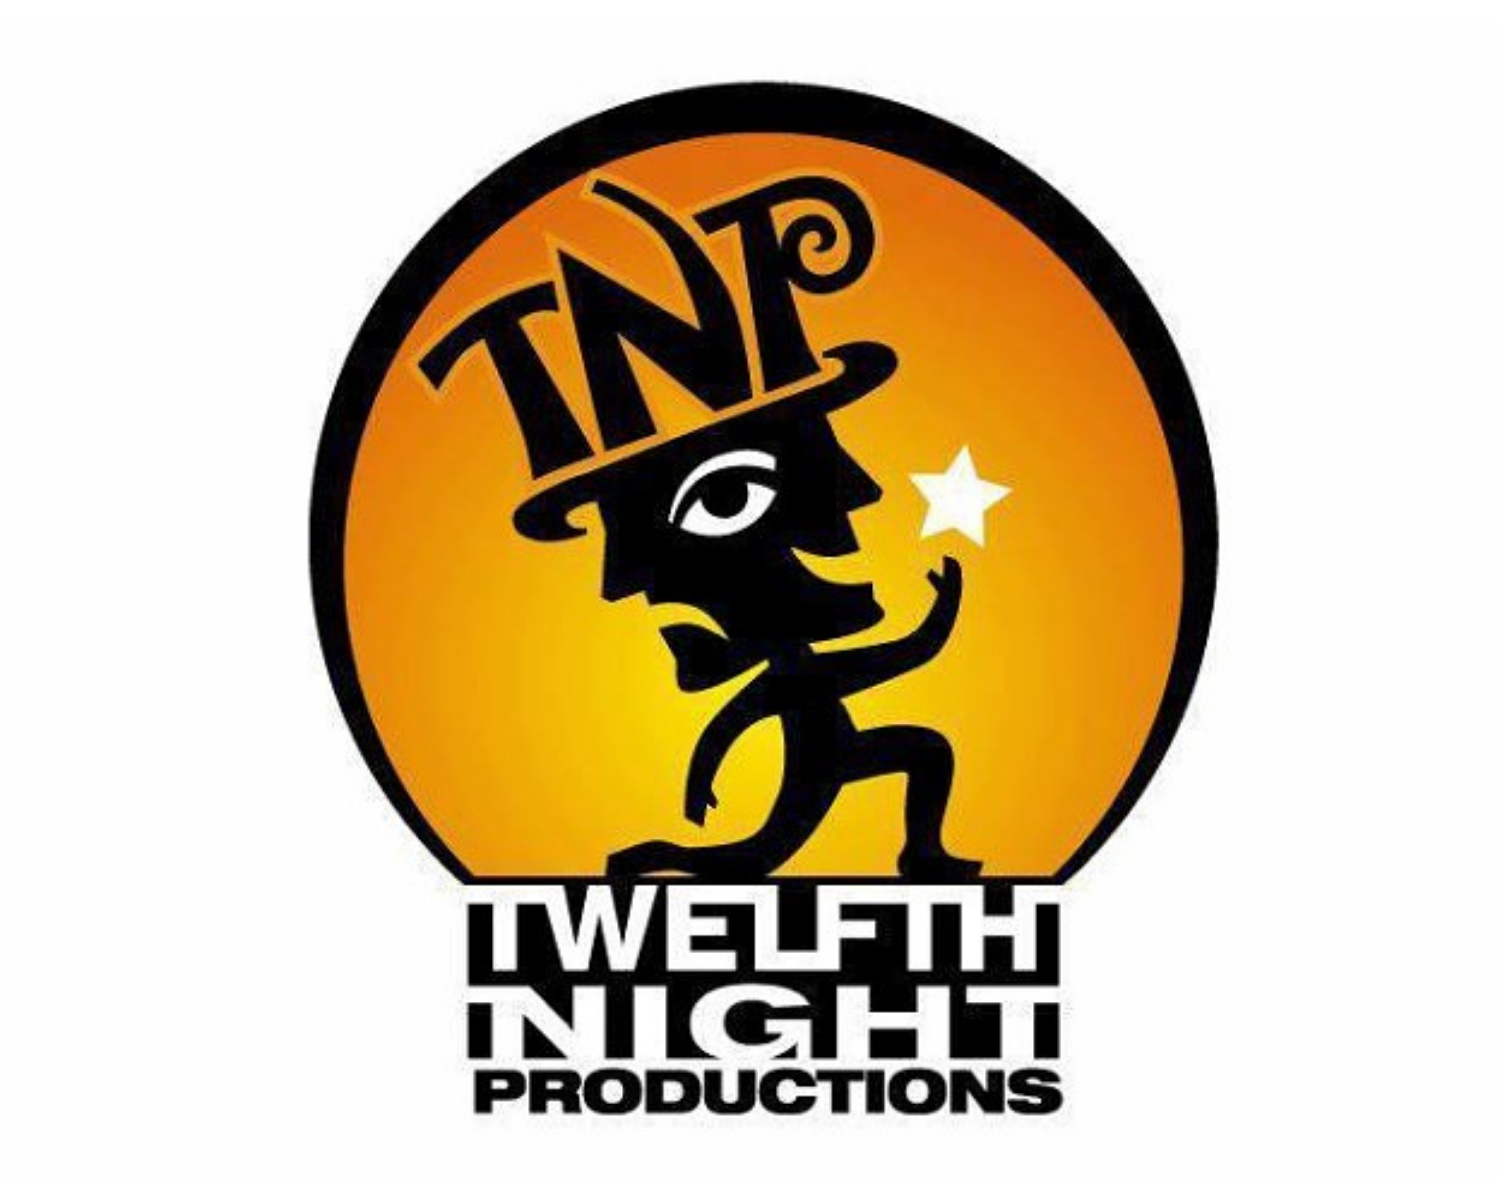 Twelfth Night Productions